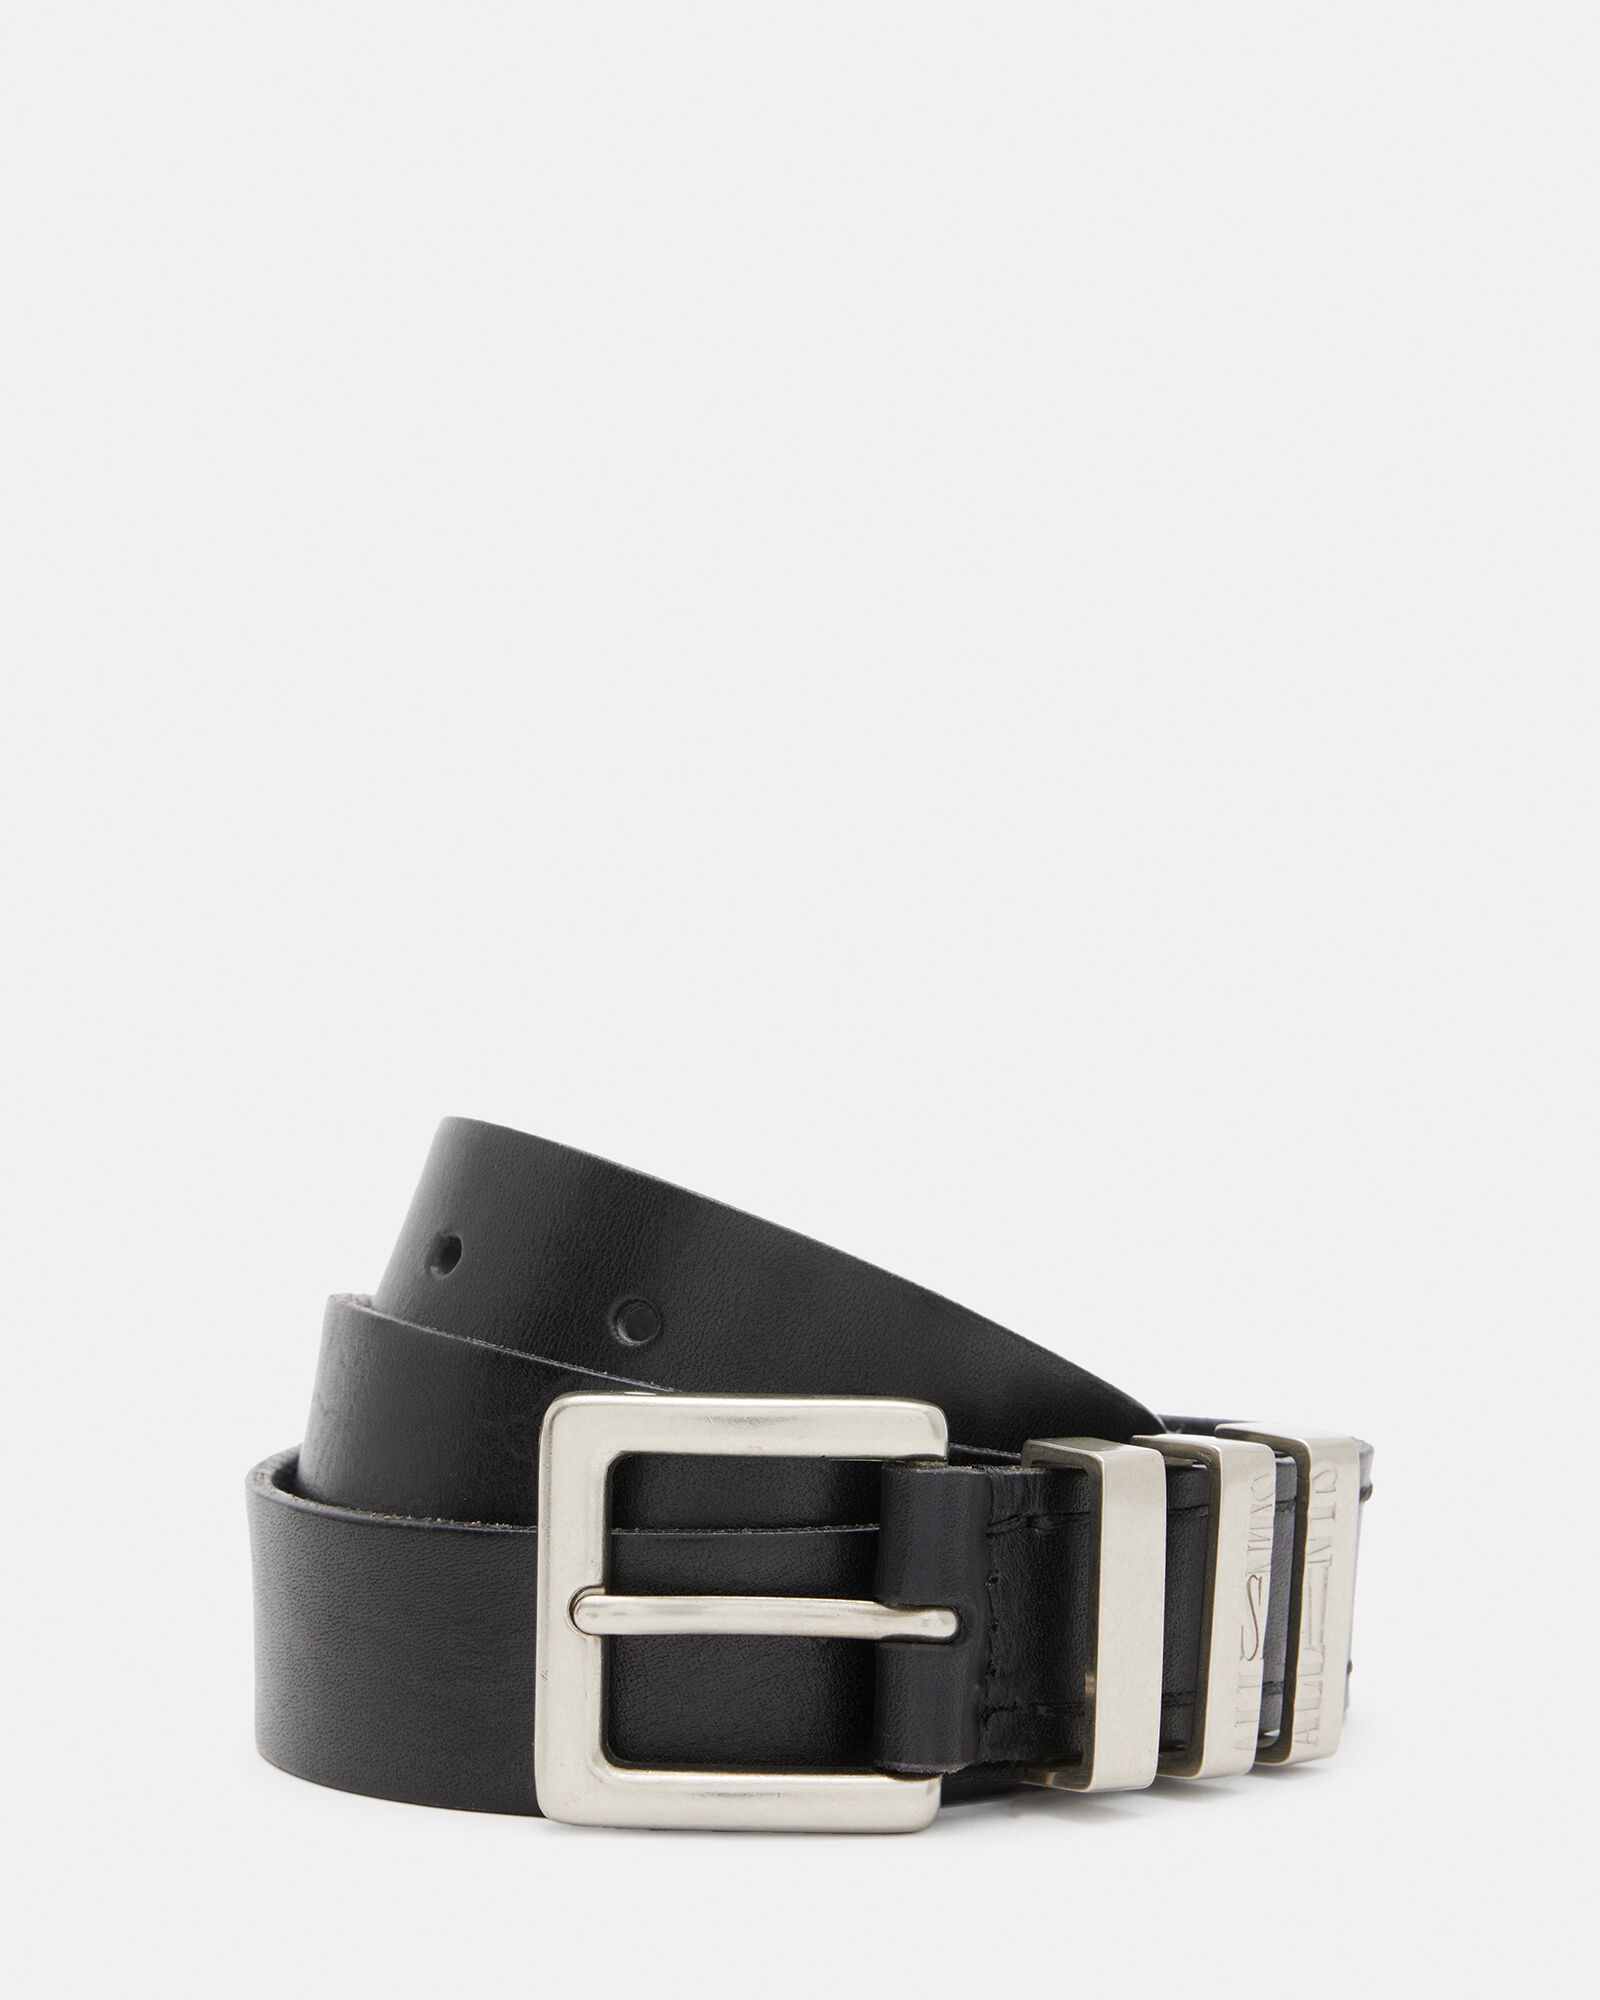 Mens Design Leather Black Fashion Belt Benz Logo Automatic Buckle Waist  Strap | eBay